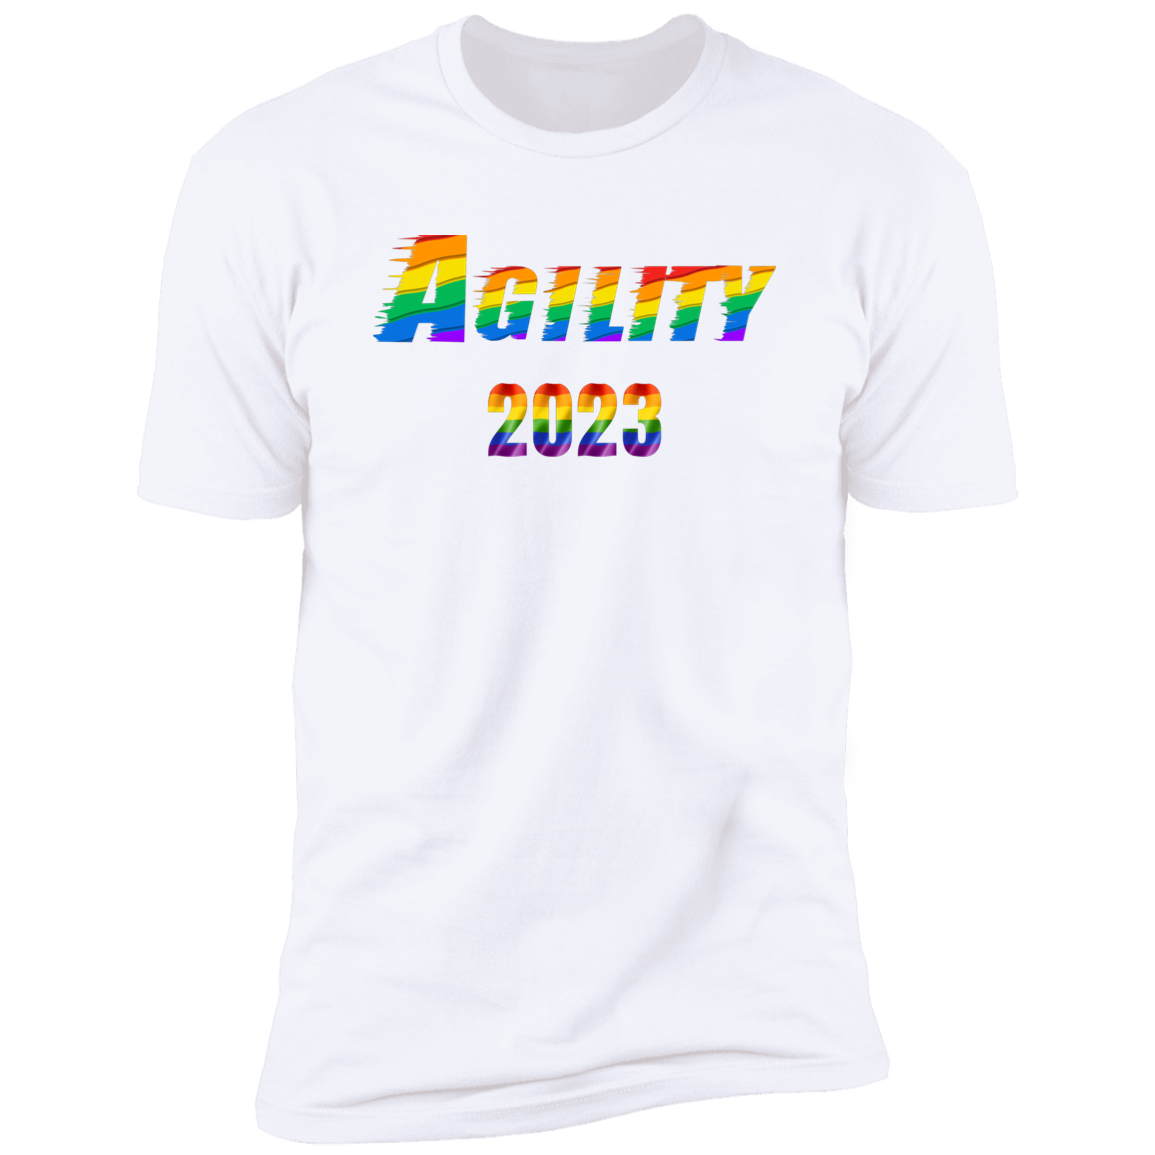 Agility Pride 2023 Cat pride t-shirt,  Agility pride shirt for humans, in whiteAgility Pride 2023 Cat pride t-shirt,  Agility pride shirt for humans, in white